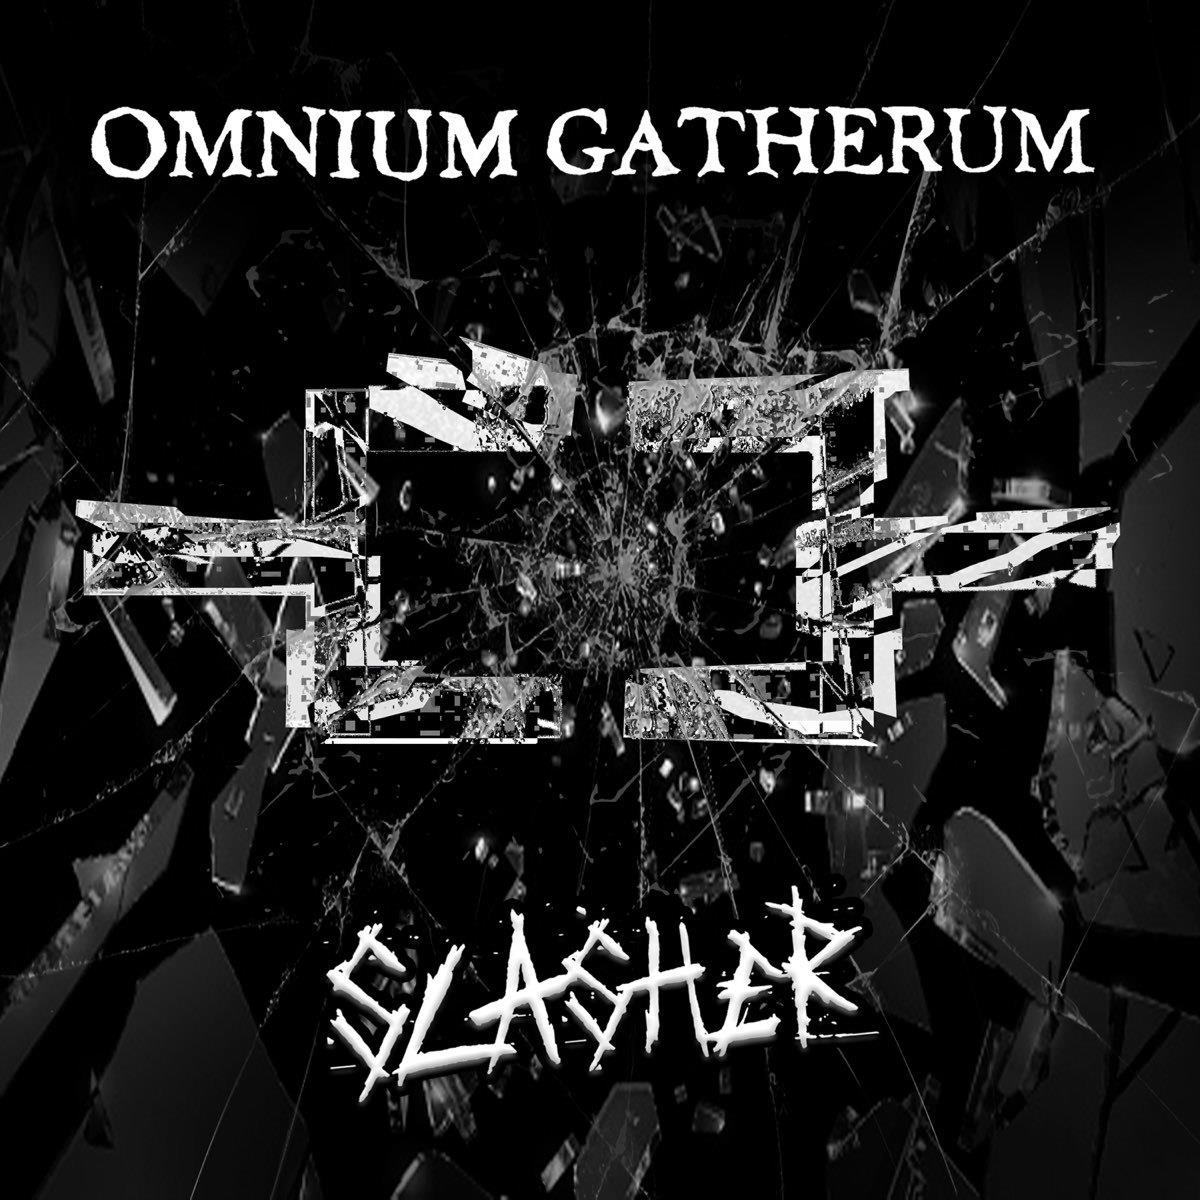 Slasher - EP by Omnium Gatherum (CD)